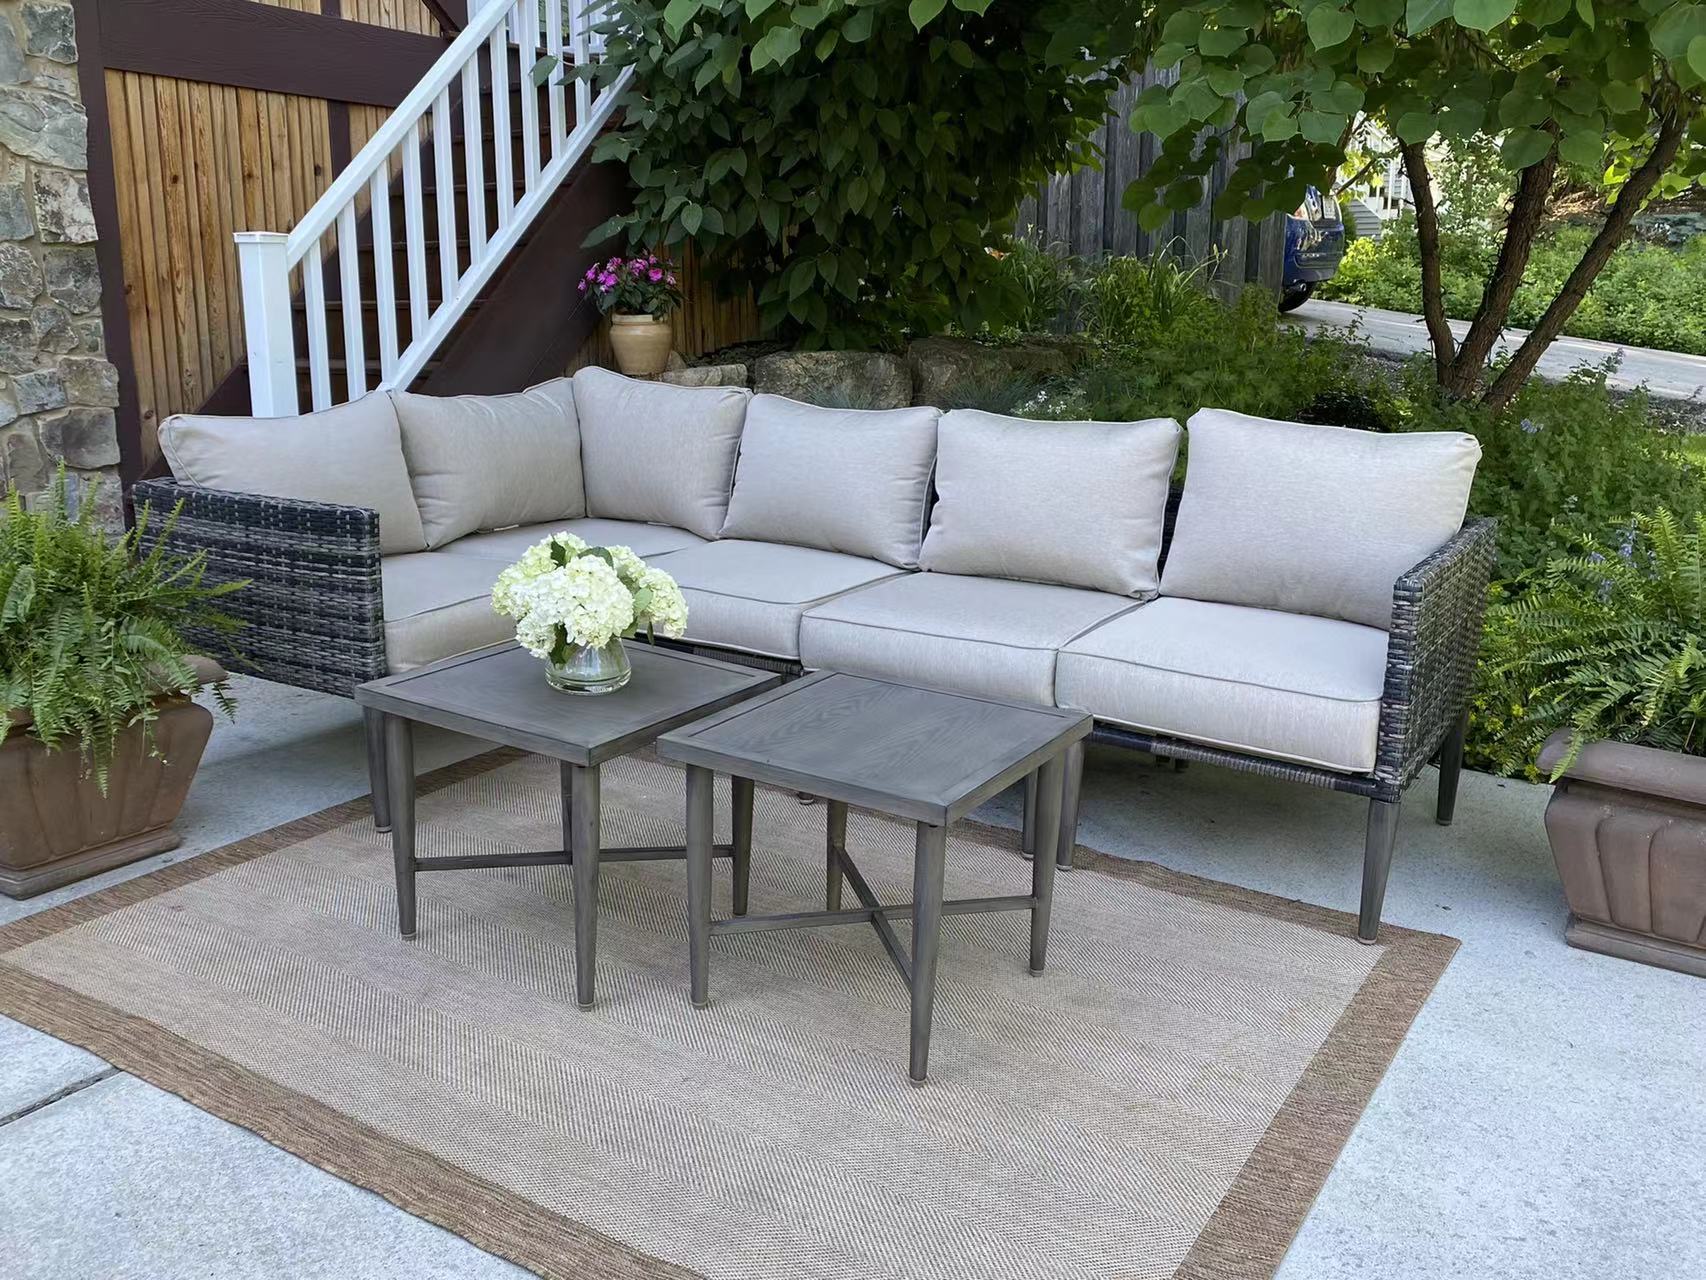 Donglin Outdoor Patio Furniture Sutton Creek 7-Piece Steel Sectional Sofa PE Wicker Rattan Set,Gray - image 1 of 16